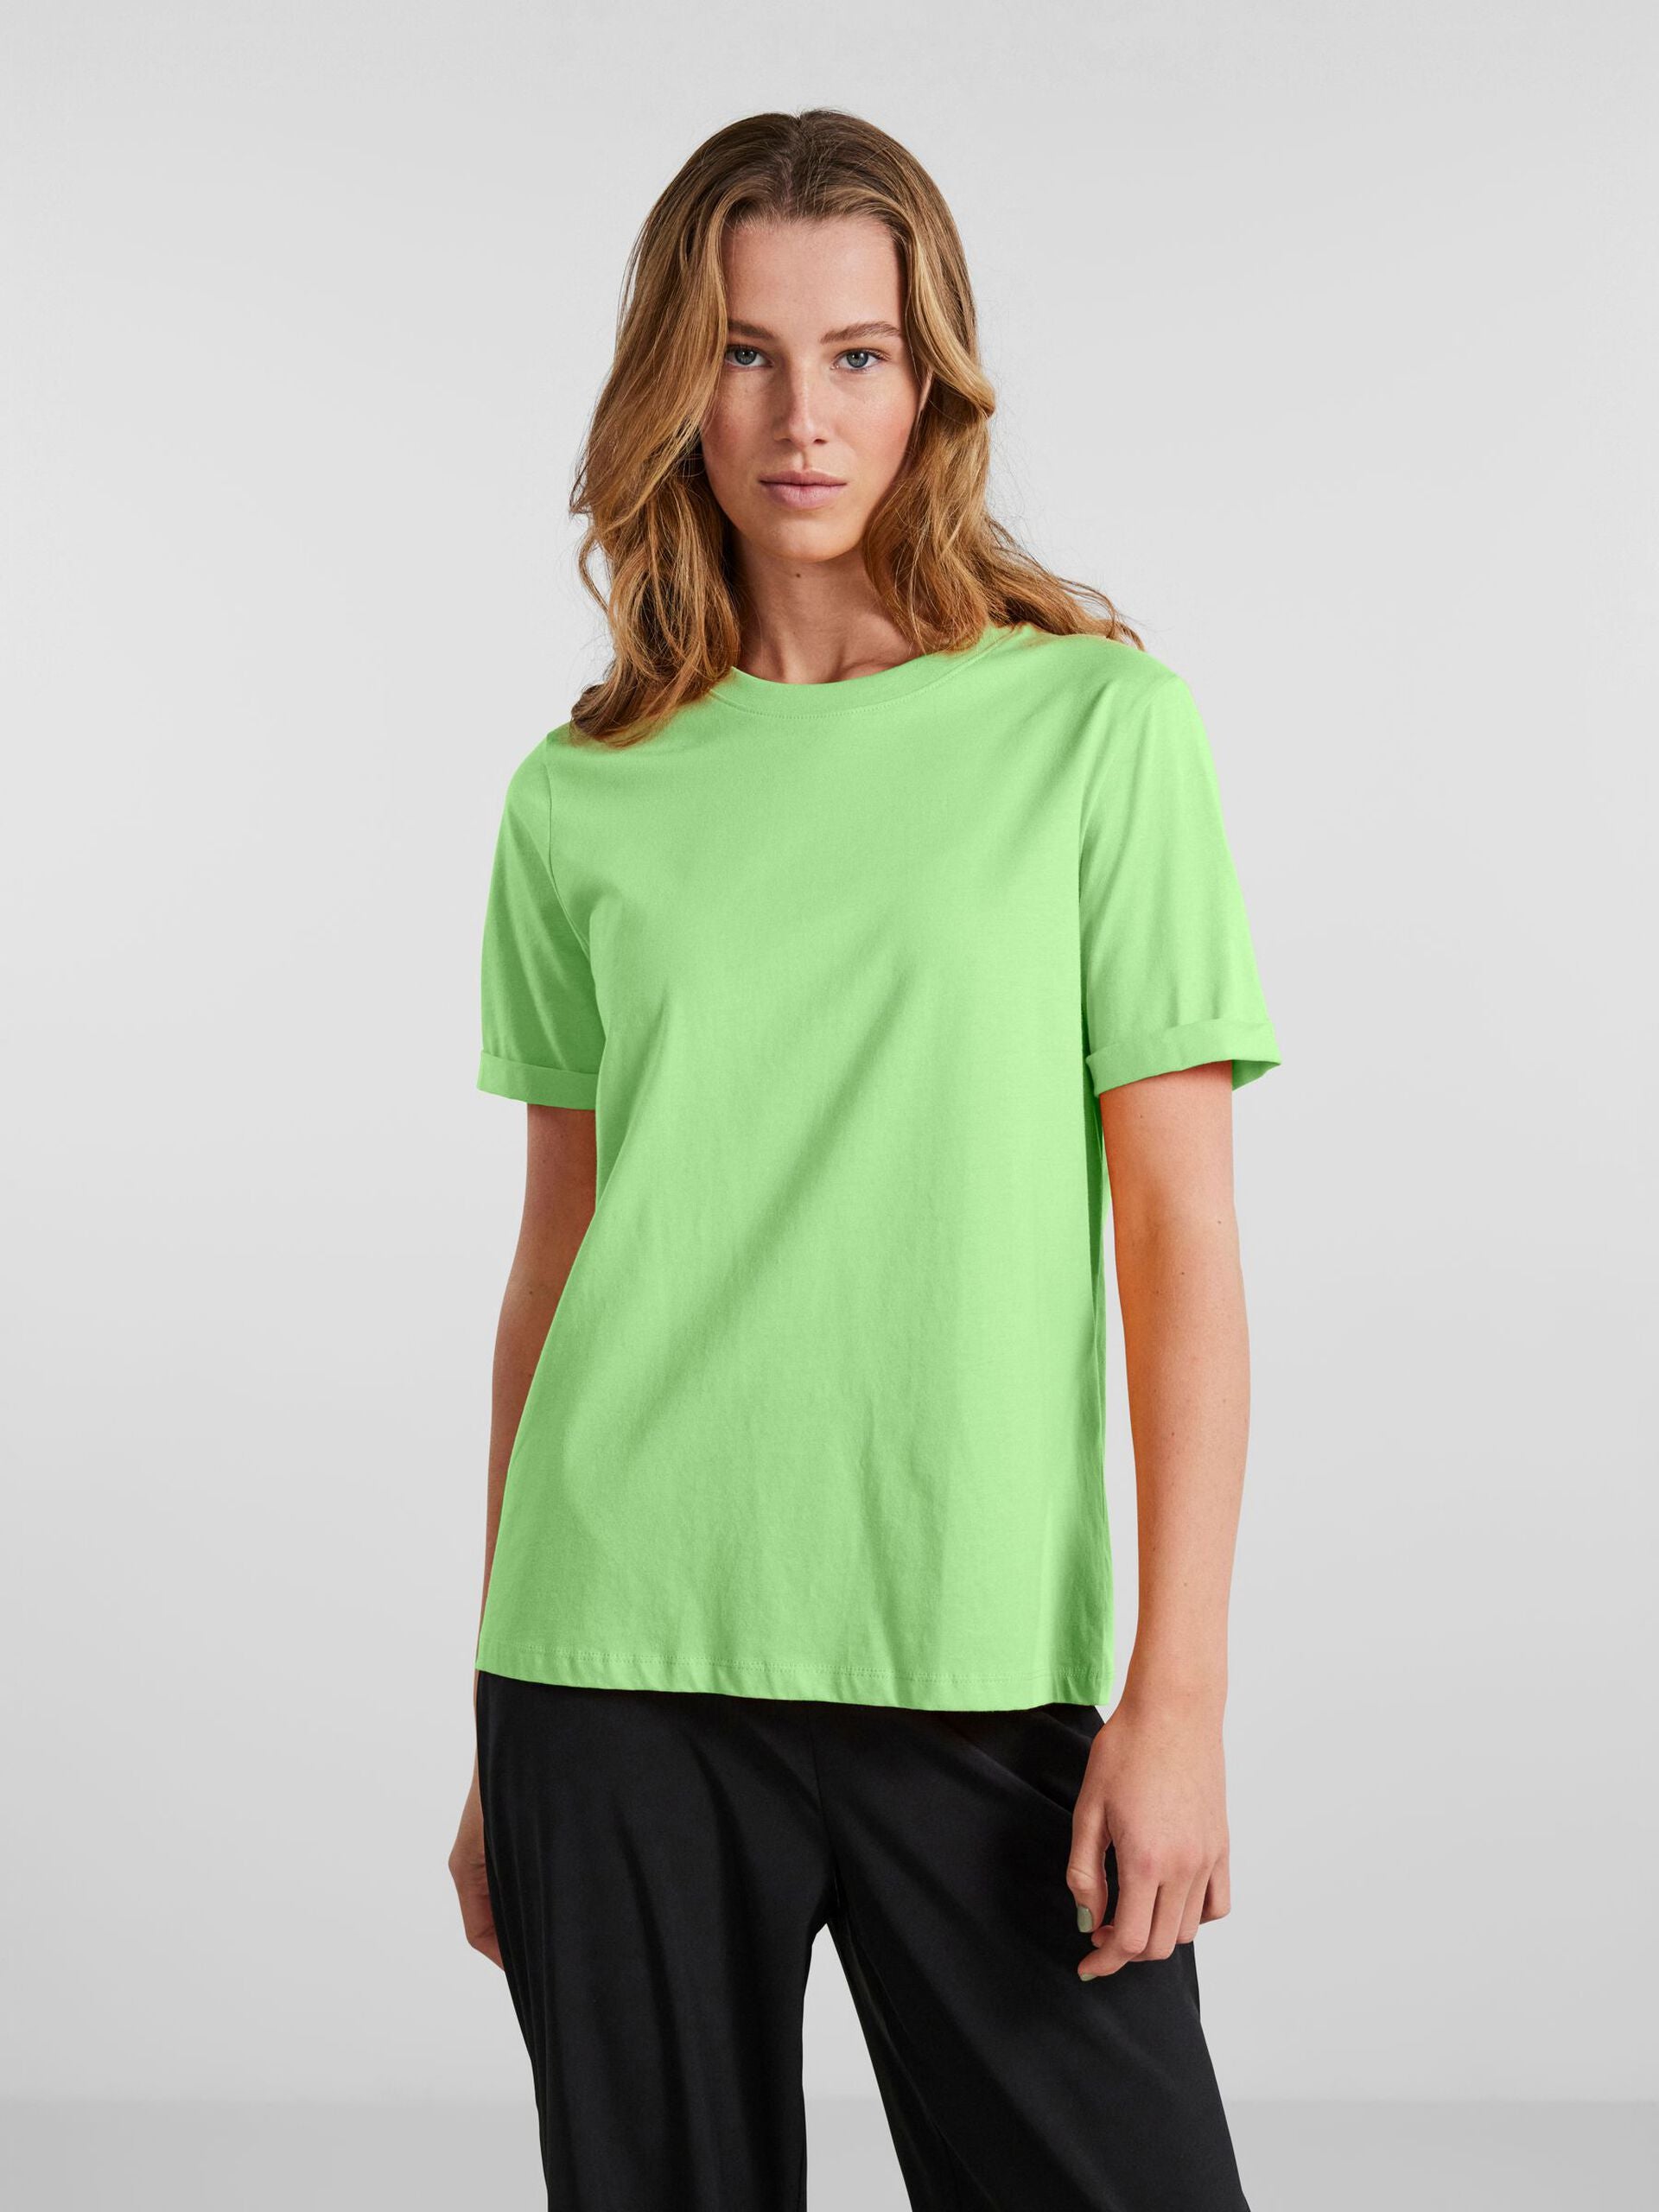 Pieces green cotton t shirt